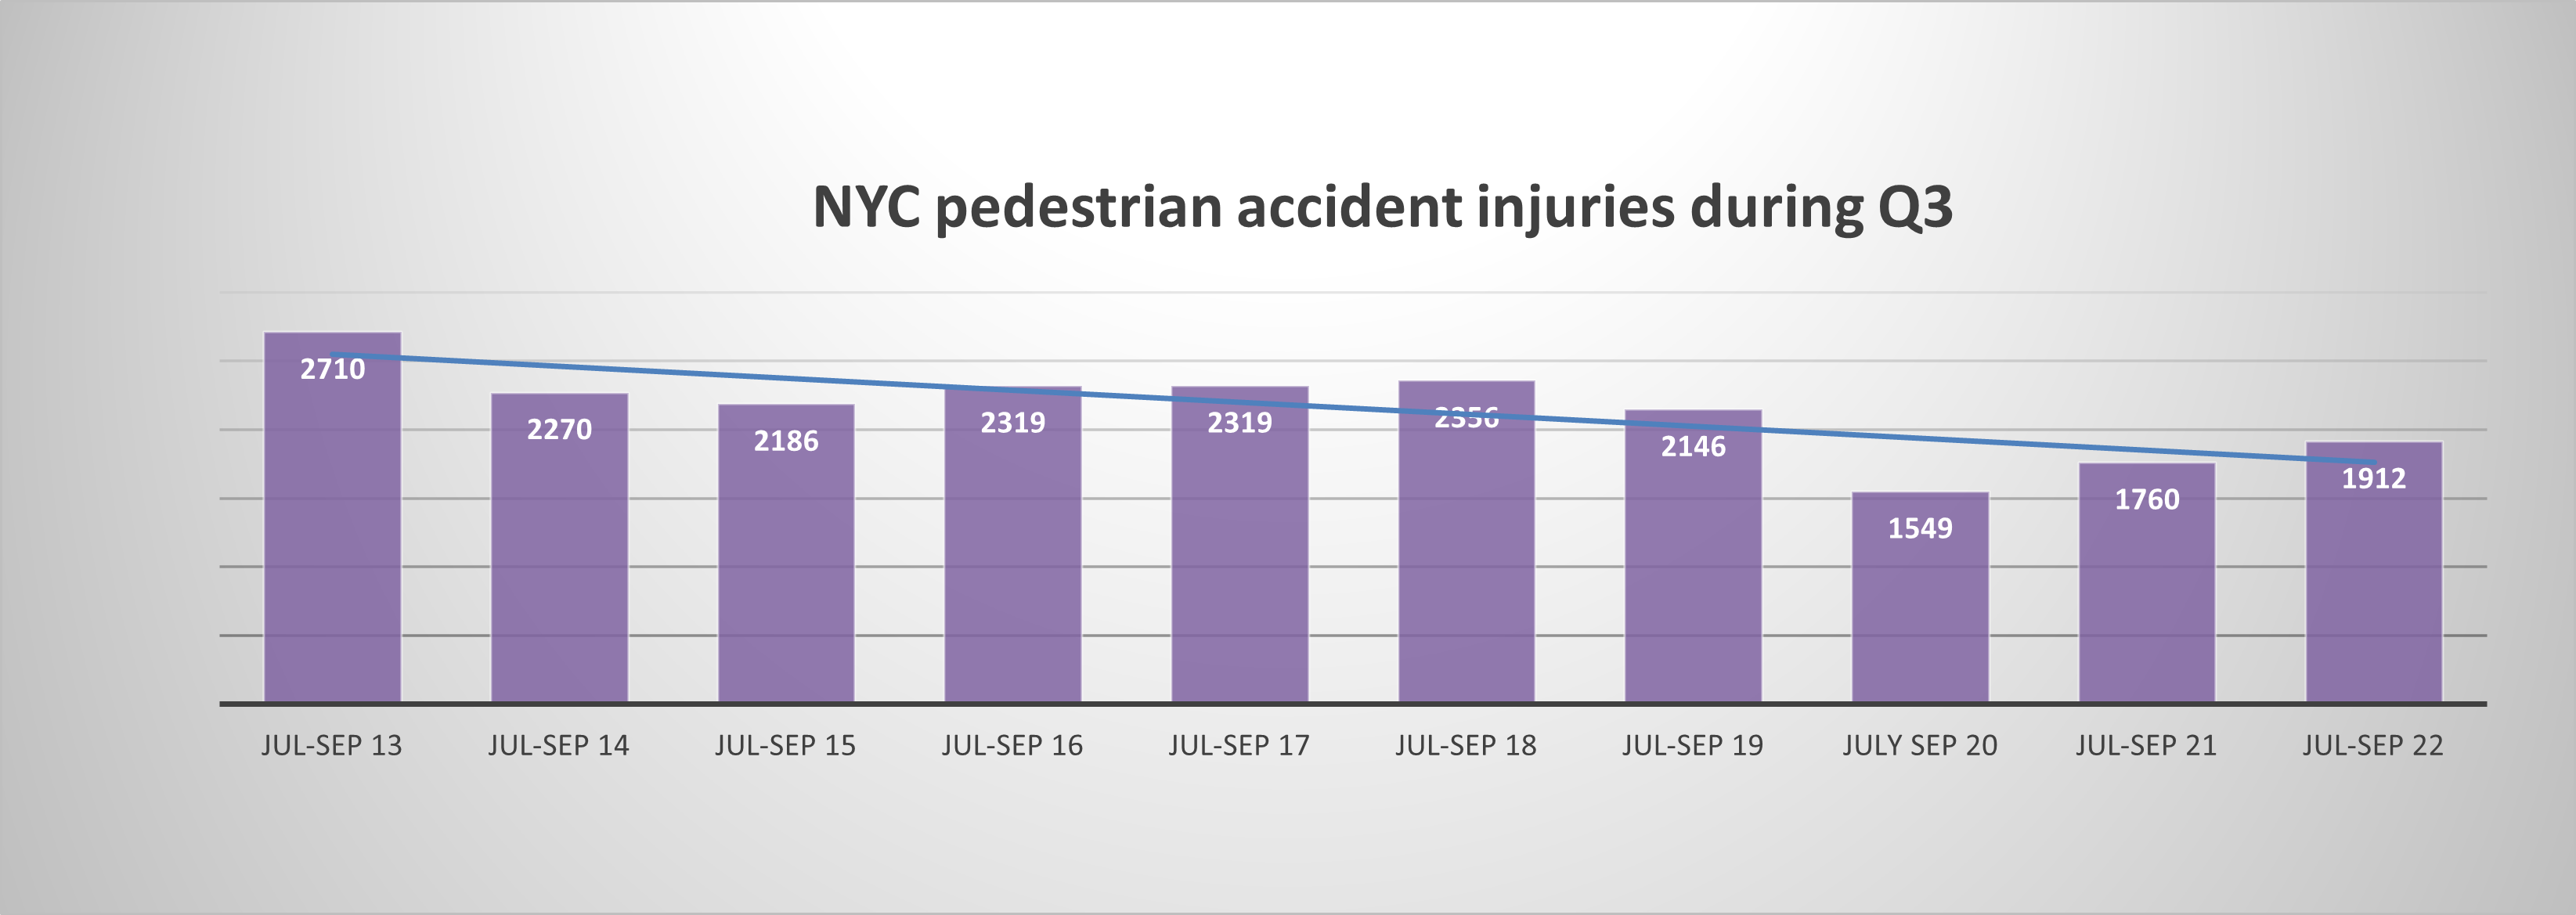 pedestrian injuries in NYC Q3 2022